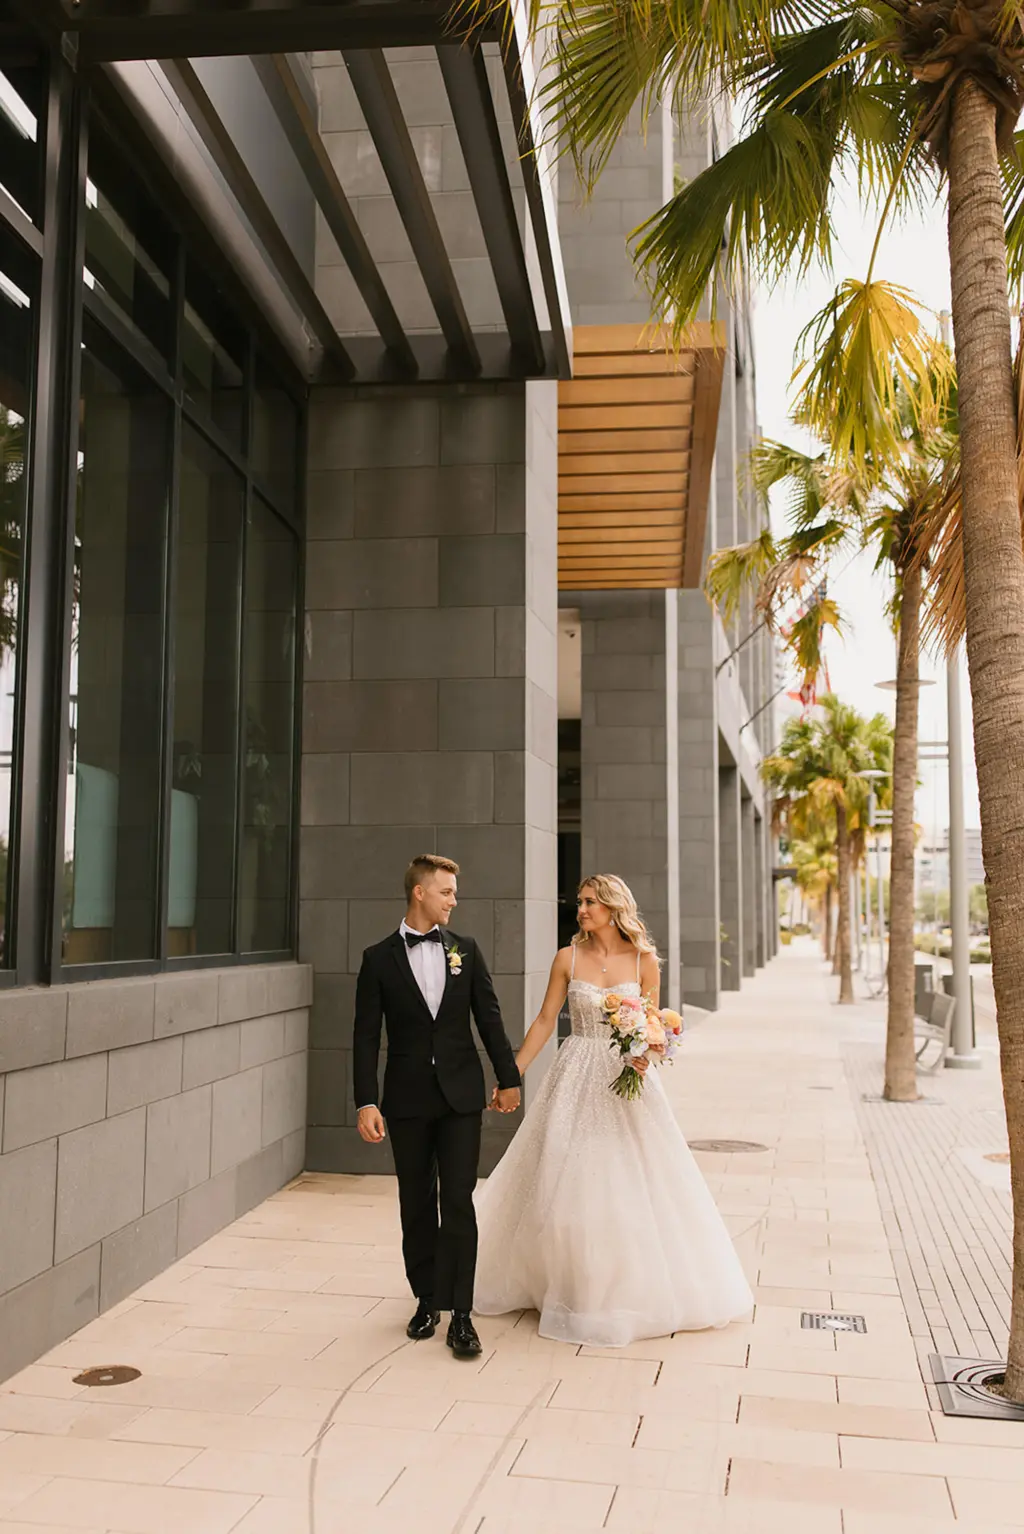 Black Groom Tuxedo Ideas | Glitter Boned Corset Bodice A-Line Berta Wedding Dress Inspiration | Tampa Bay HMUA Femme Akoi Beauty Studio